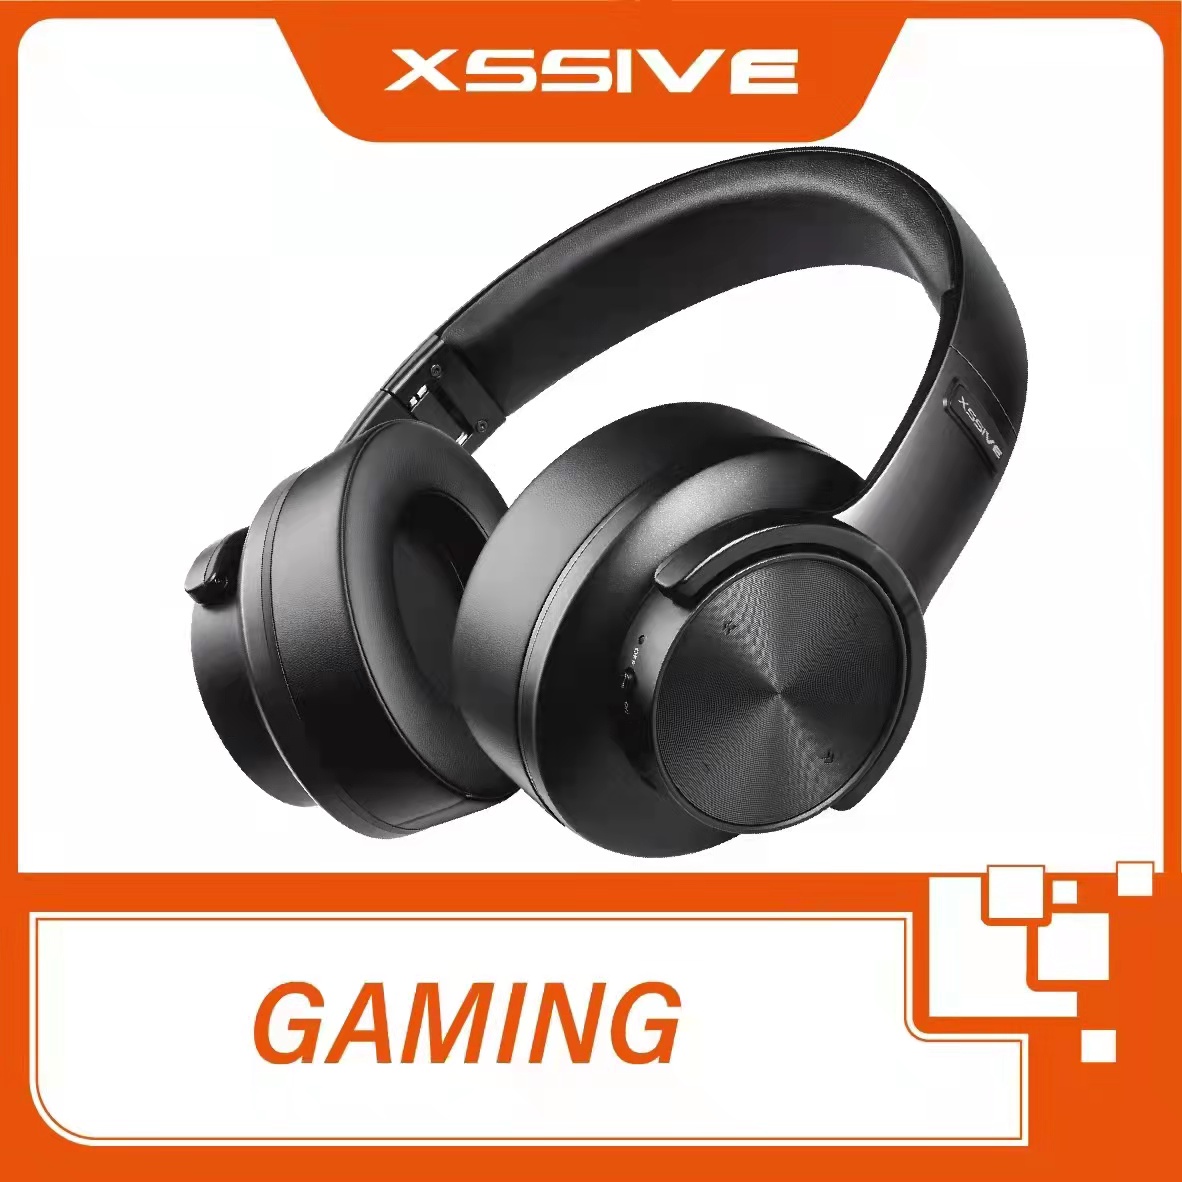 Xssive -Gaming